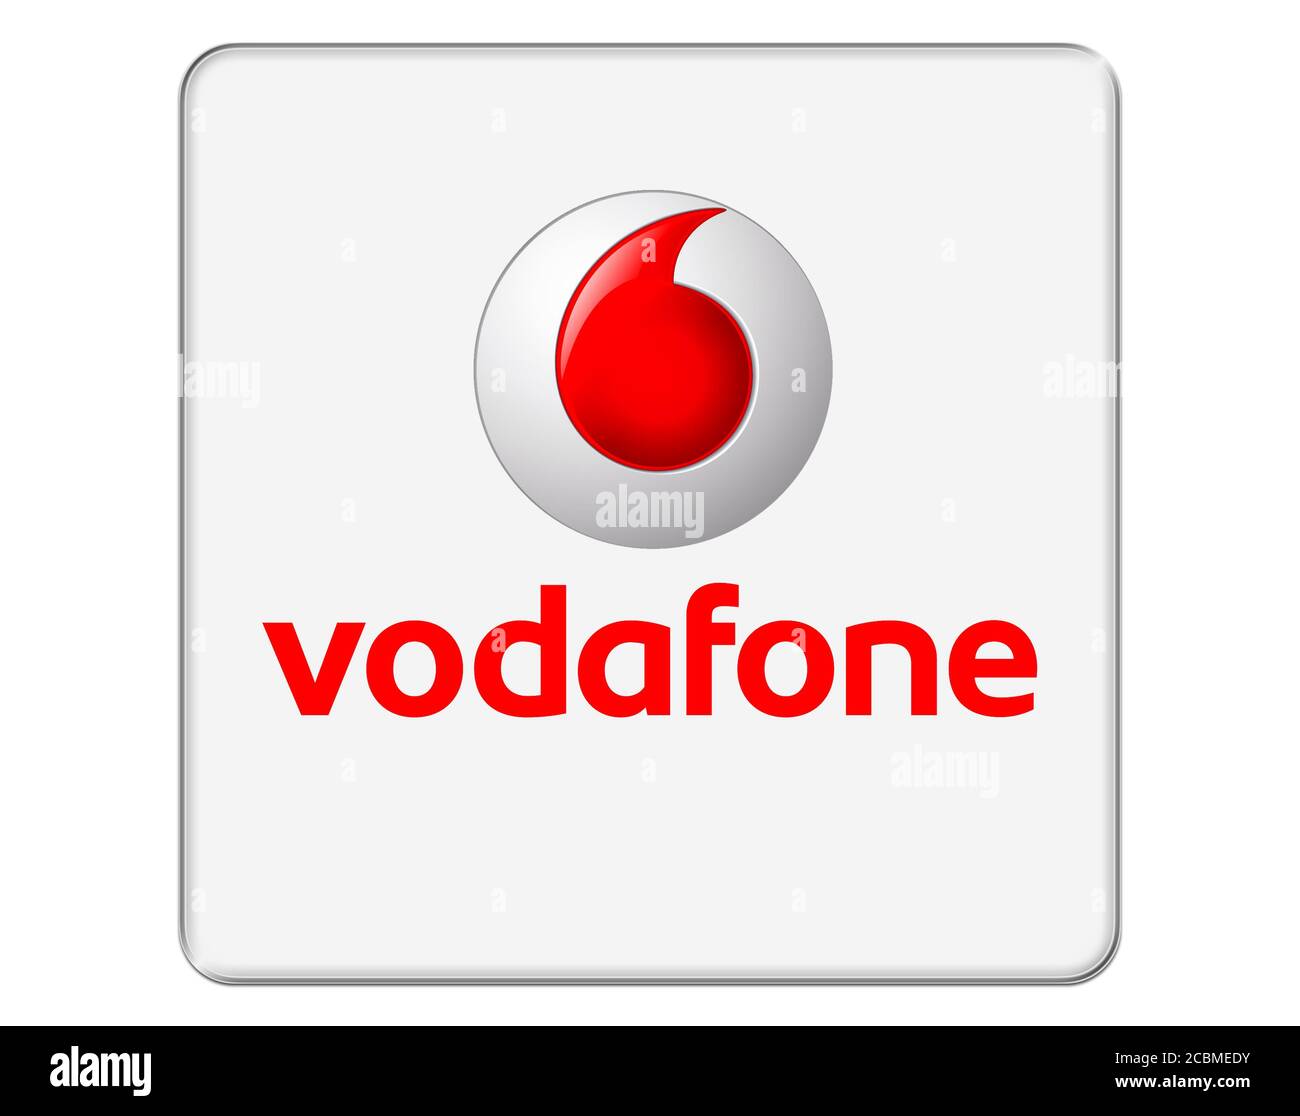 Vodafone Stock Photo